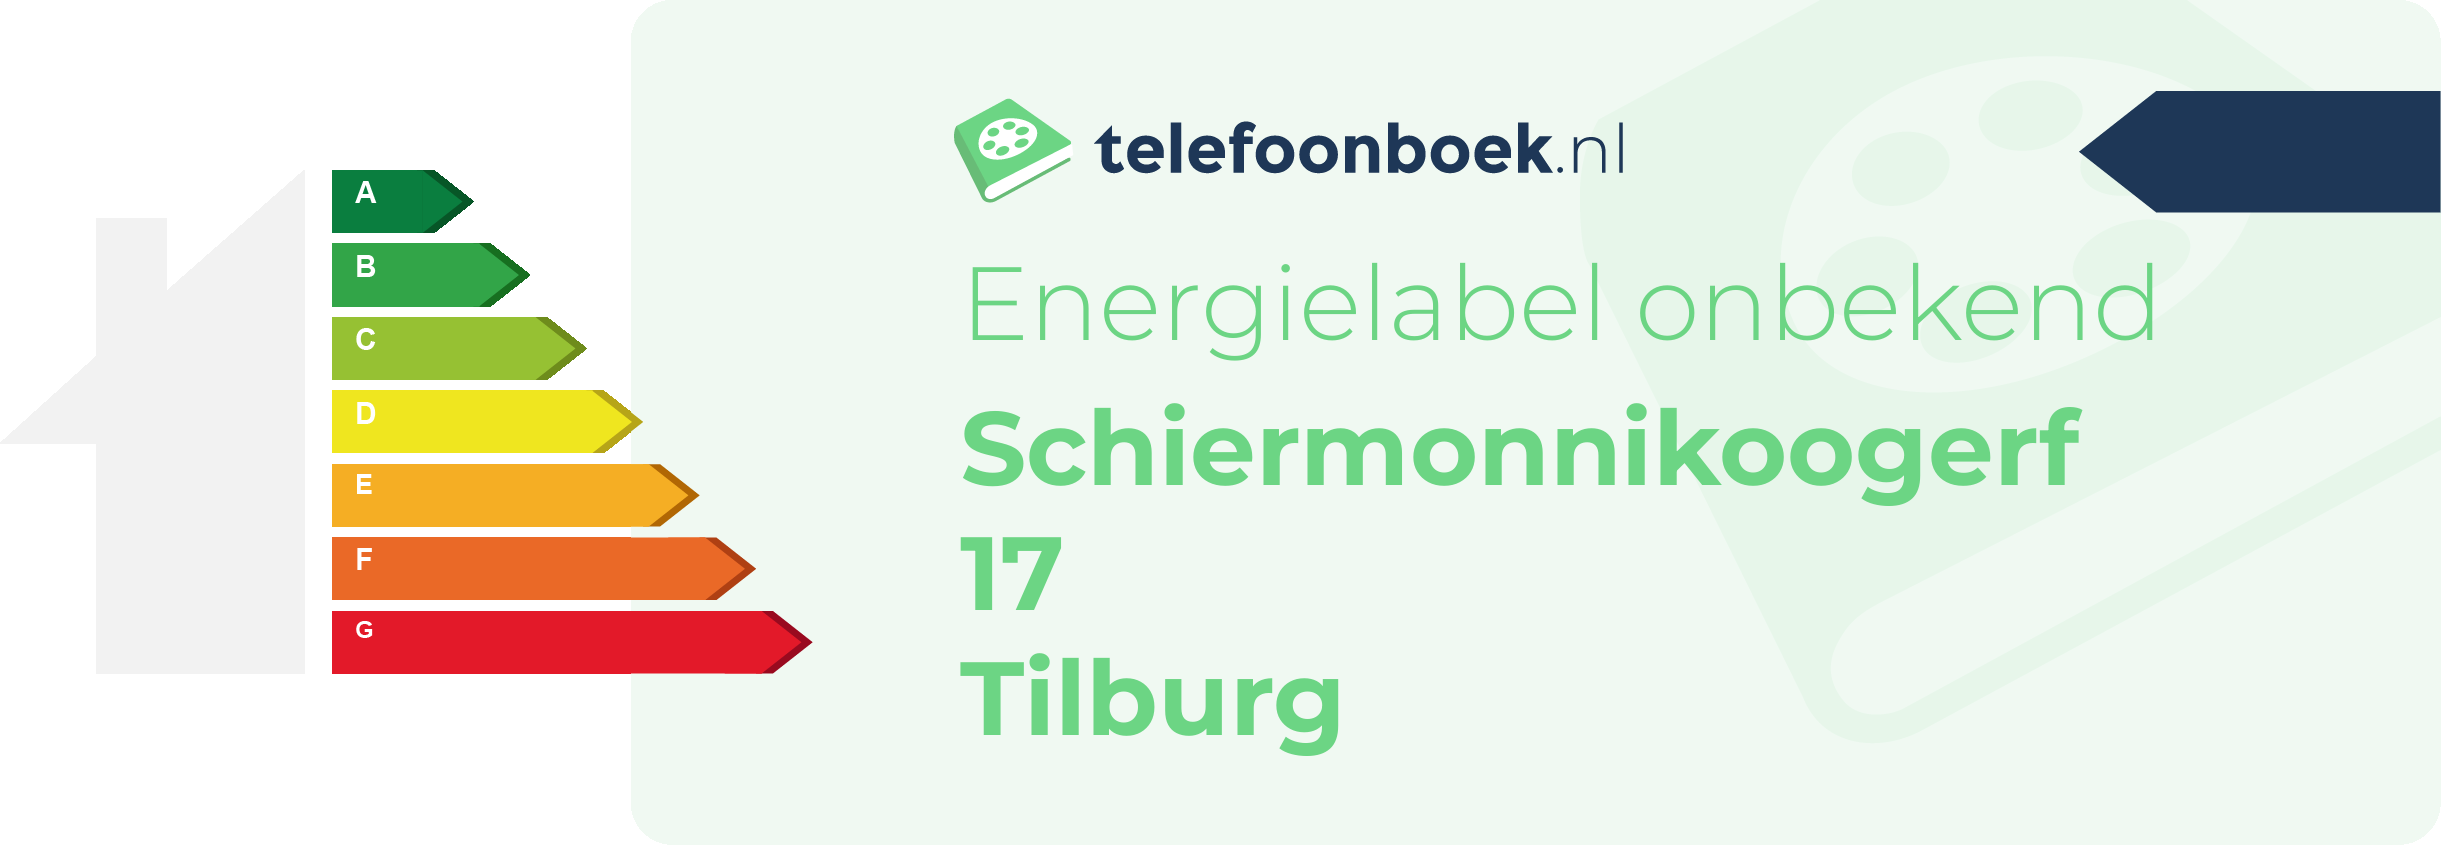 Energielabel Schiermonnikoogerf 17 Tilburg